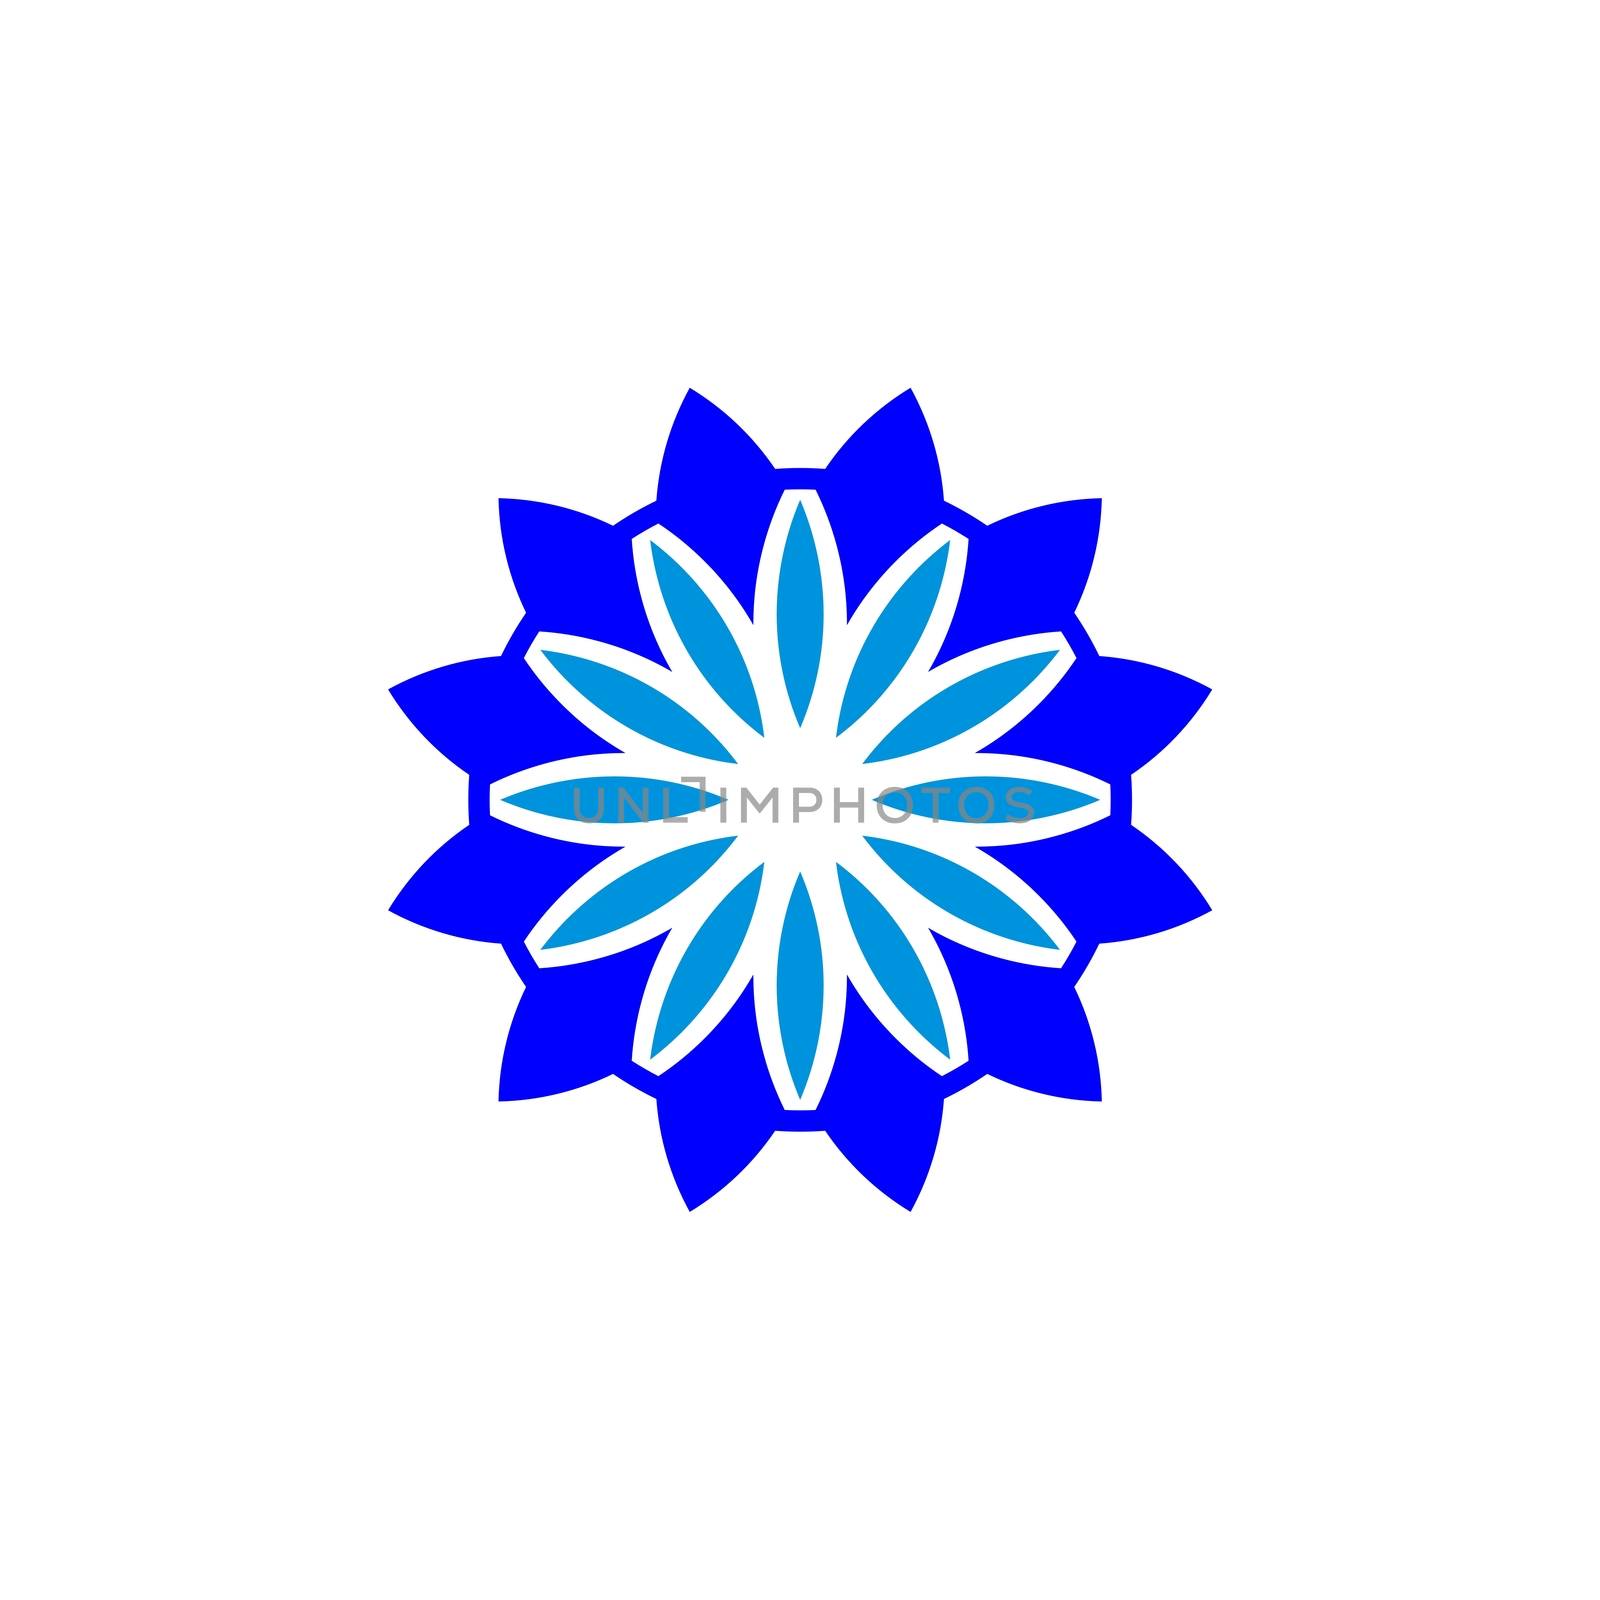 Blue Sunflower Logo Template Illustration Design EPS 10 by soponyono1